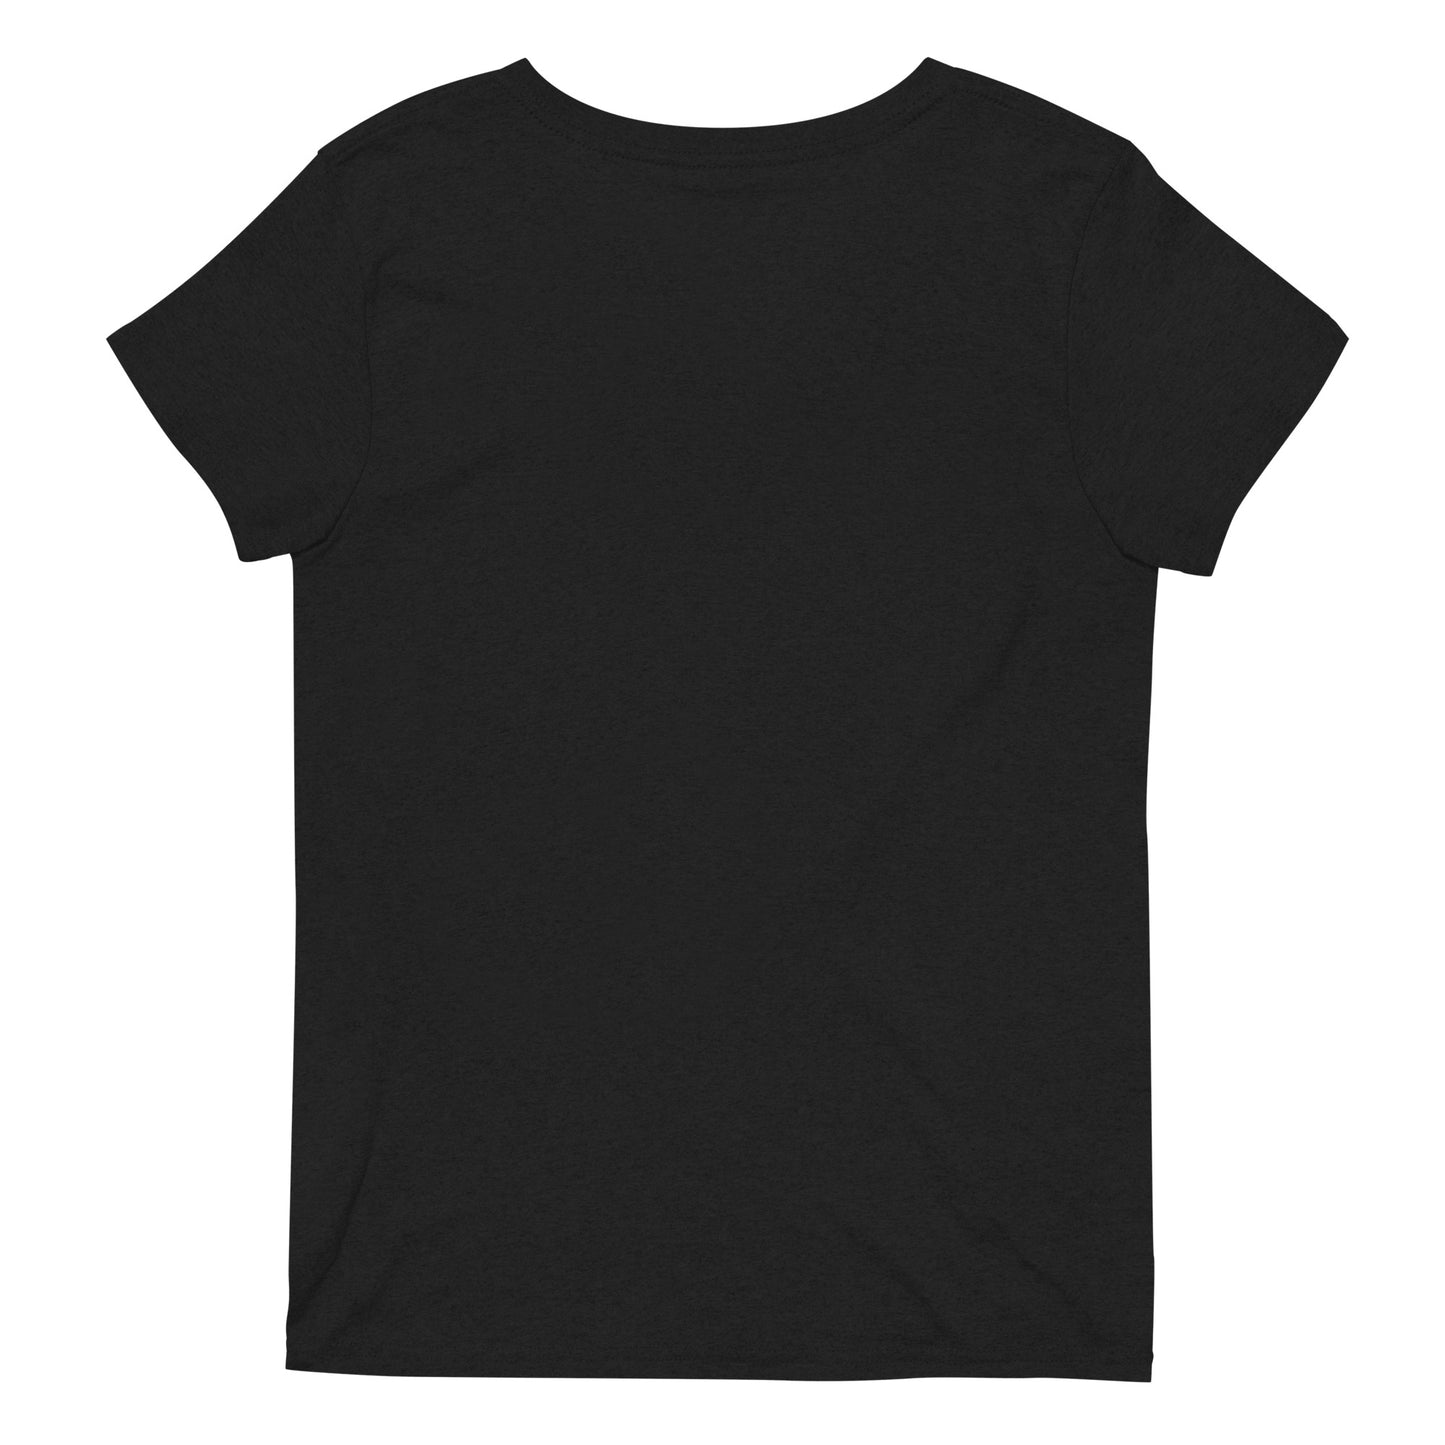 Savage Logo Women’s Recycled Soft V-neck T-shirt